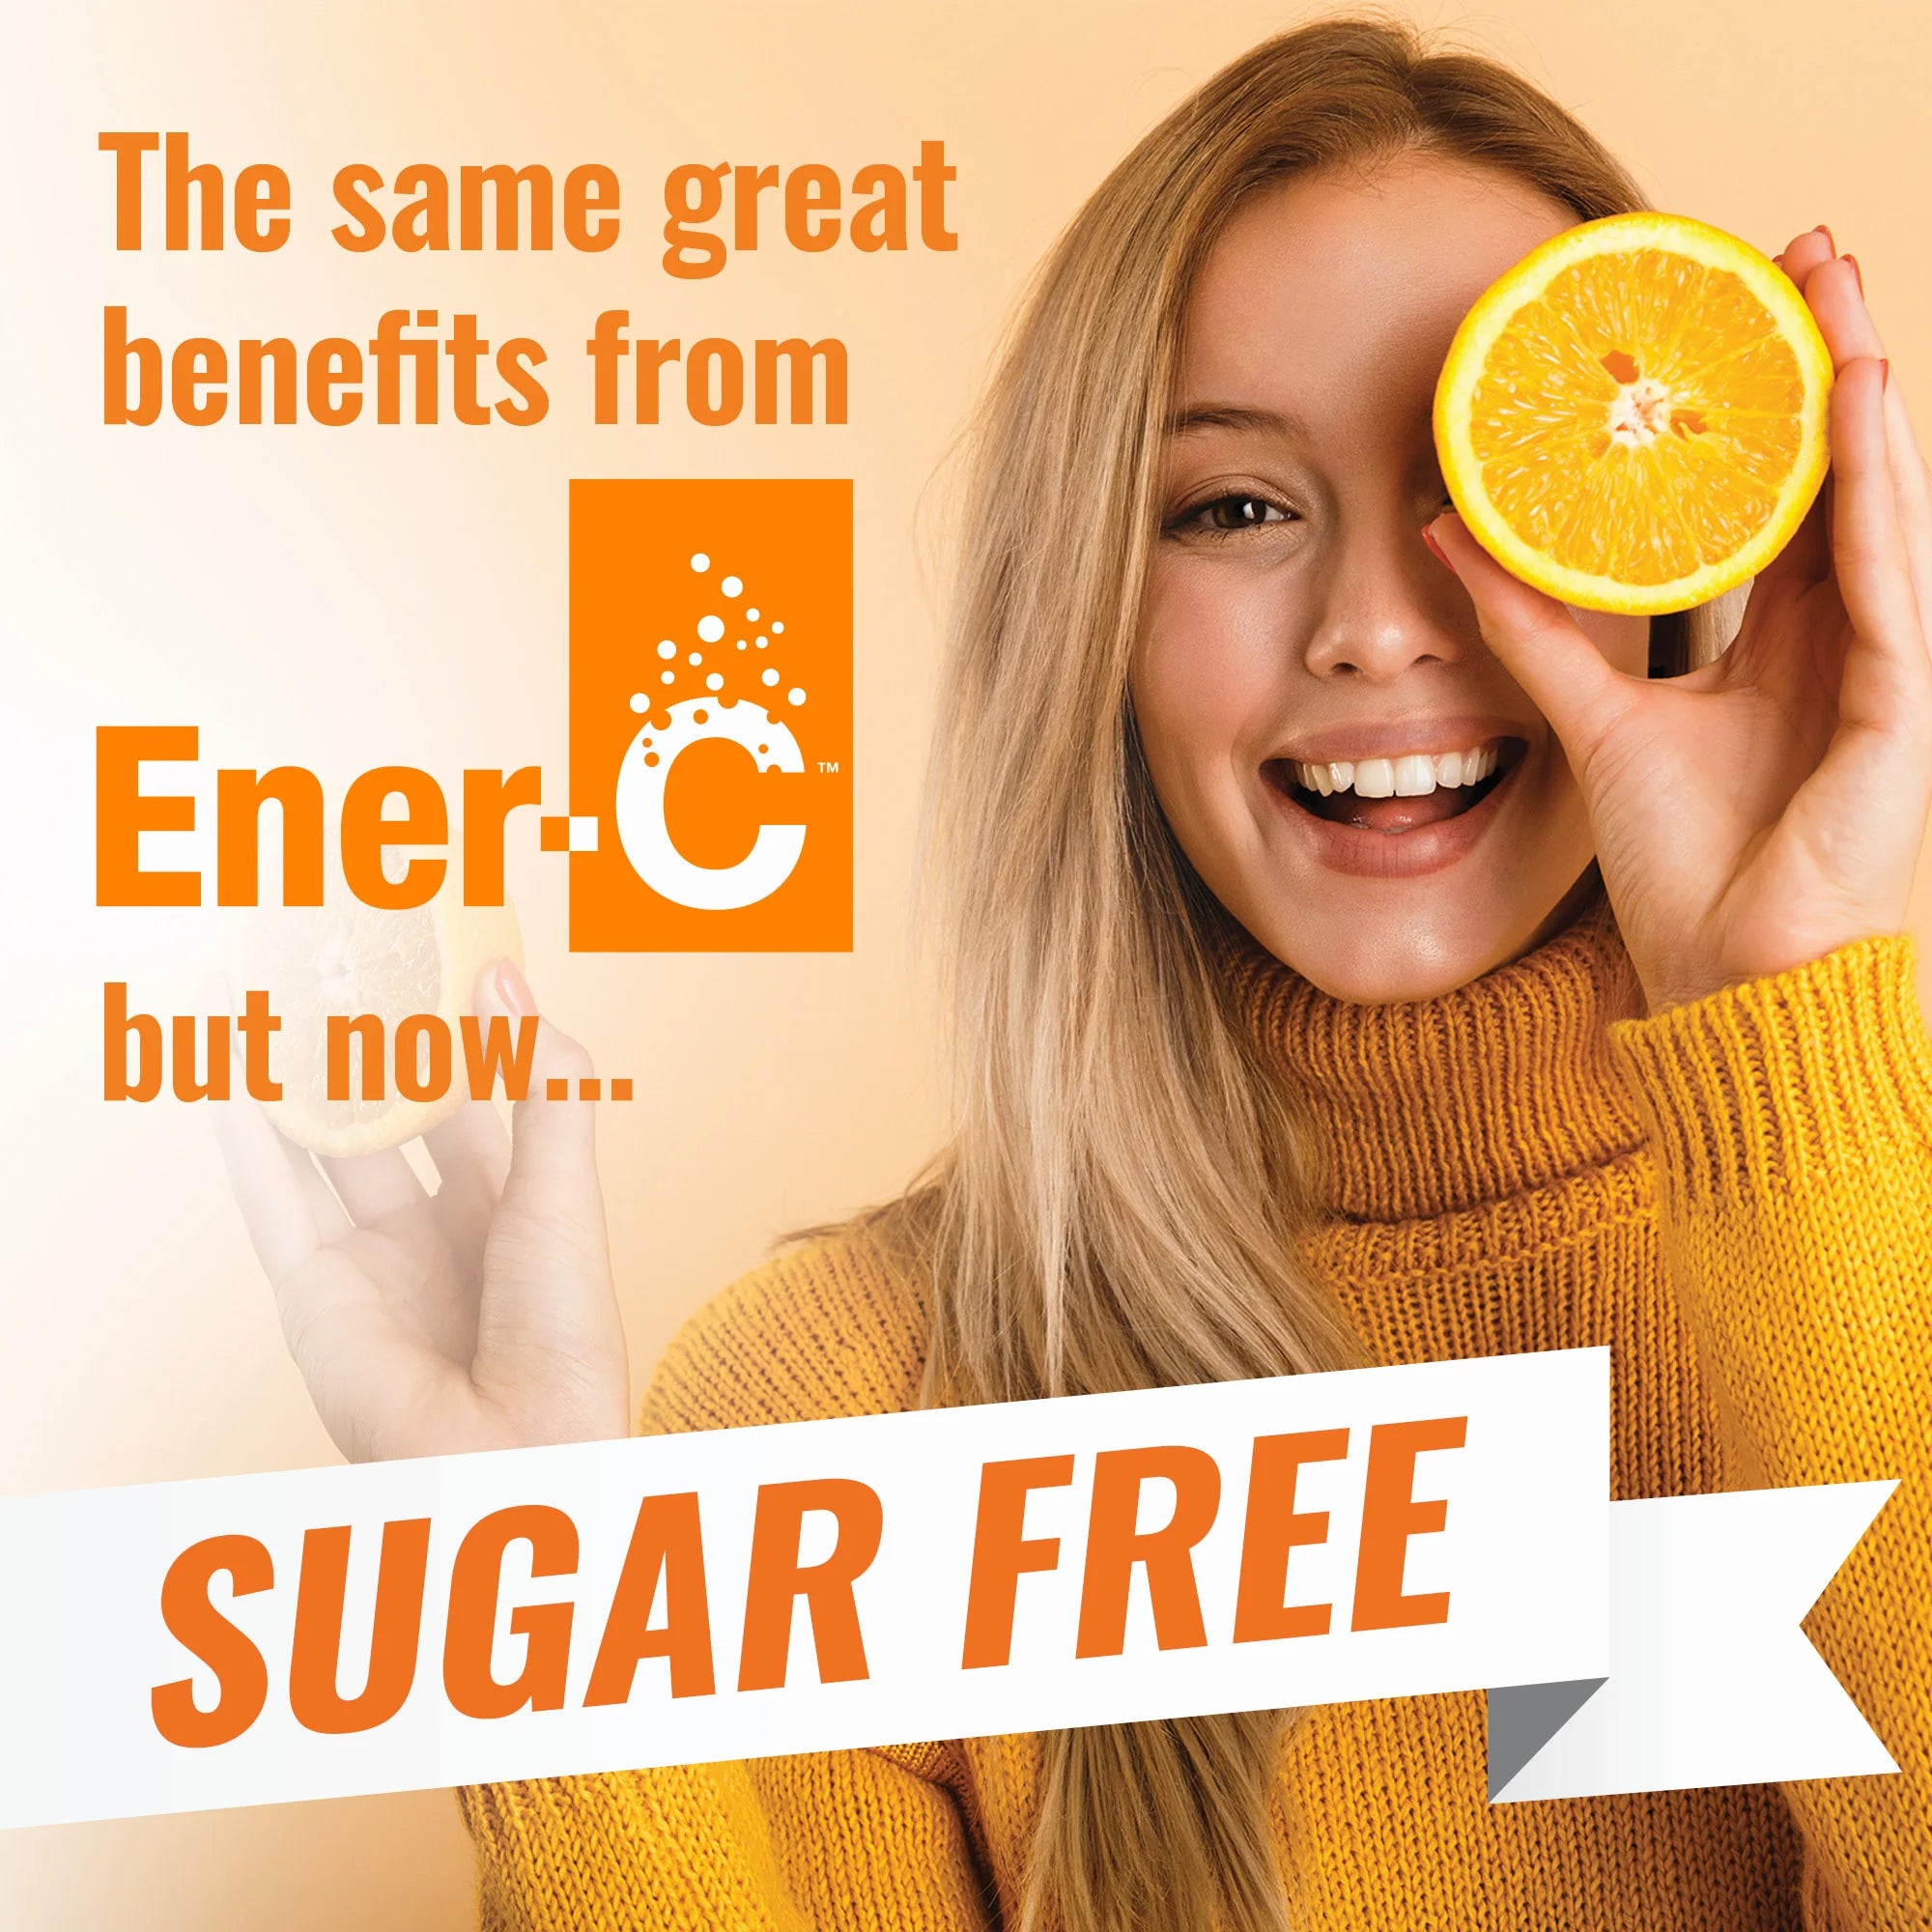 Ener-Life Ener-C Sugar-Free 1000 mg Vitamin C Drink Mix (Flavour Options)